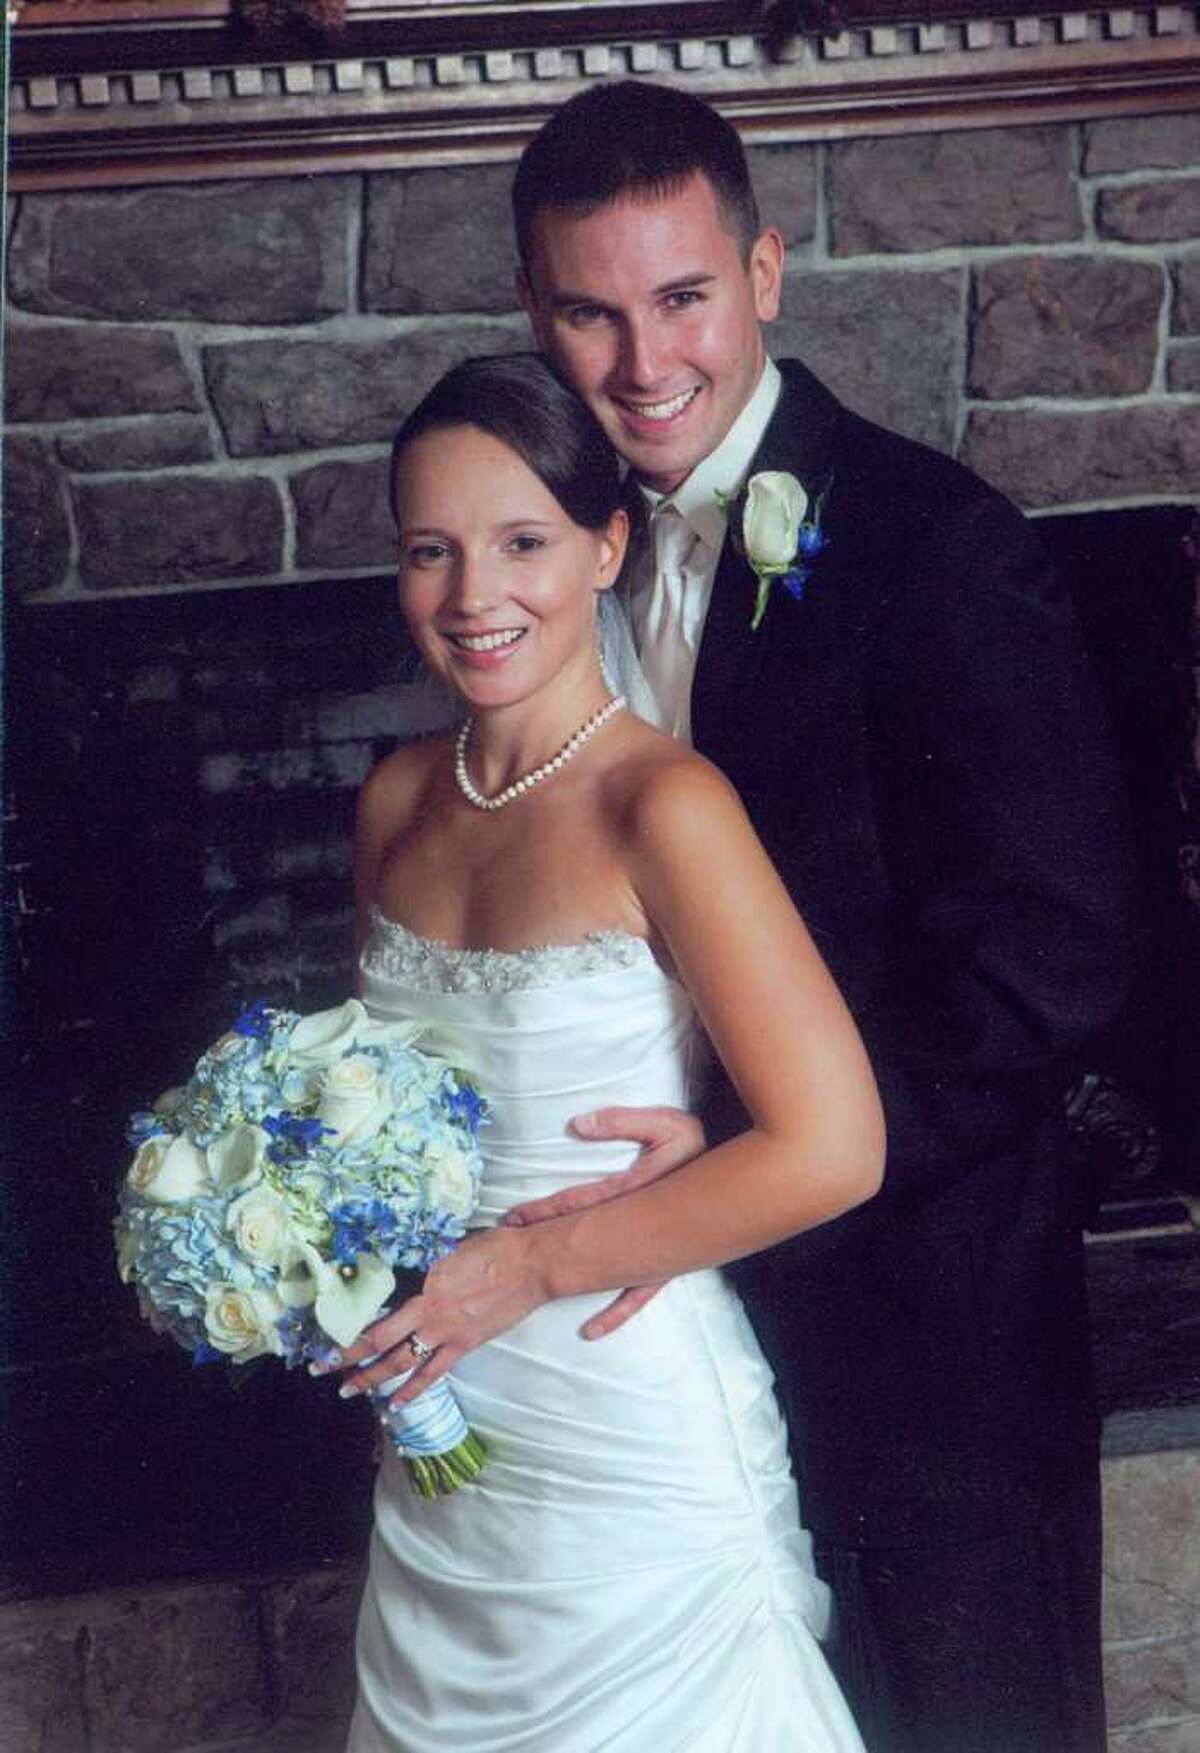 Christina Lynn Toth and Daniel Eric Laursen were united in marriage Dec. 30 at the Fox Hill Inn, Brookfield, CT.